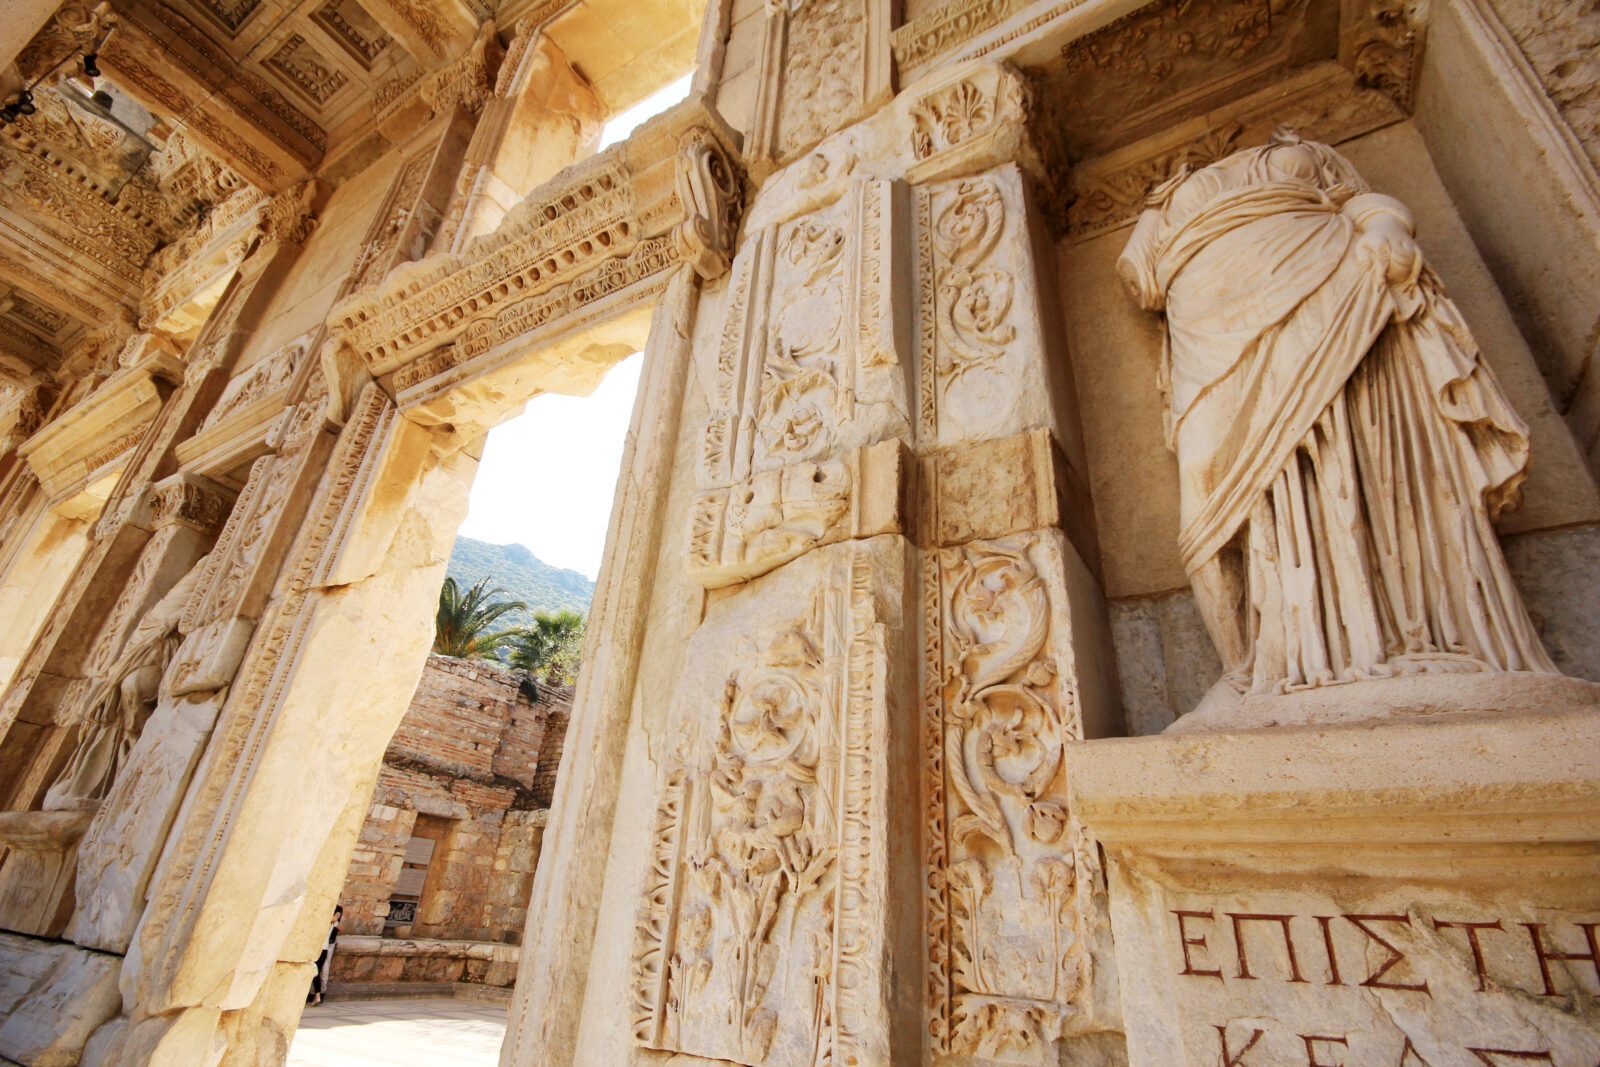 From Alexander Great to Emperor Justinian: Türkiye's ancient gems in Ephesus